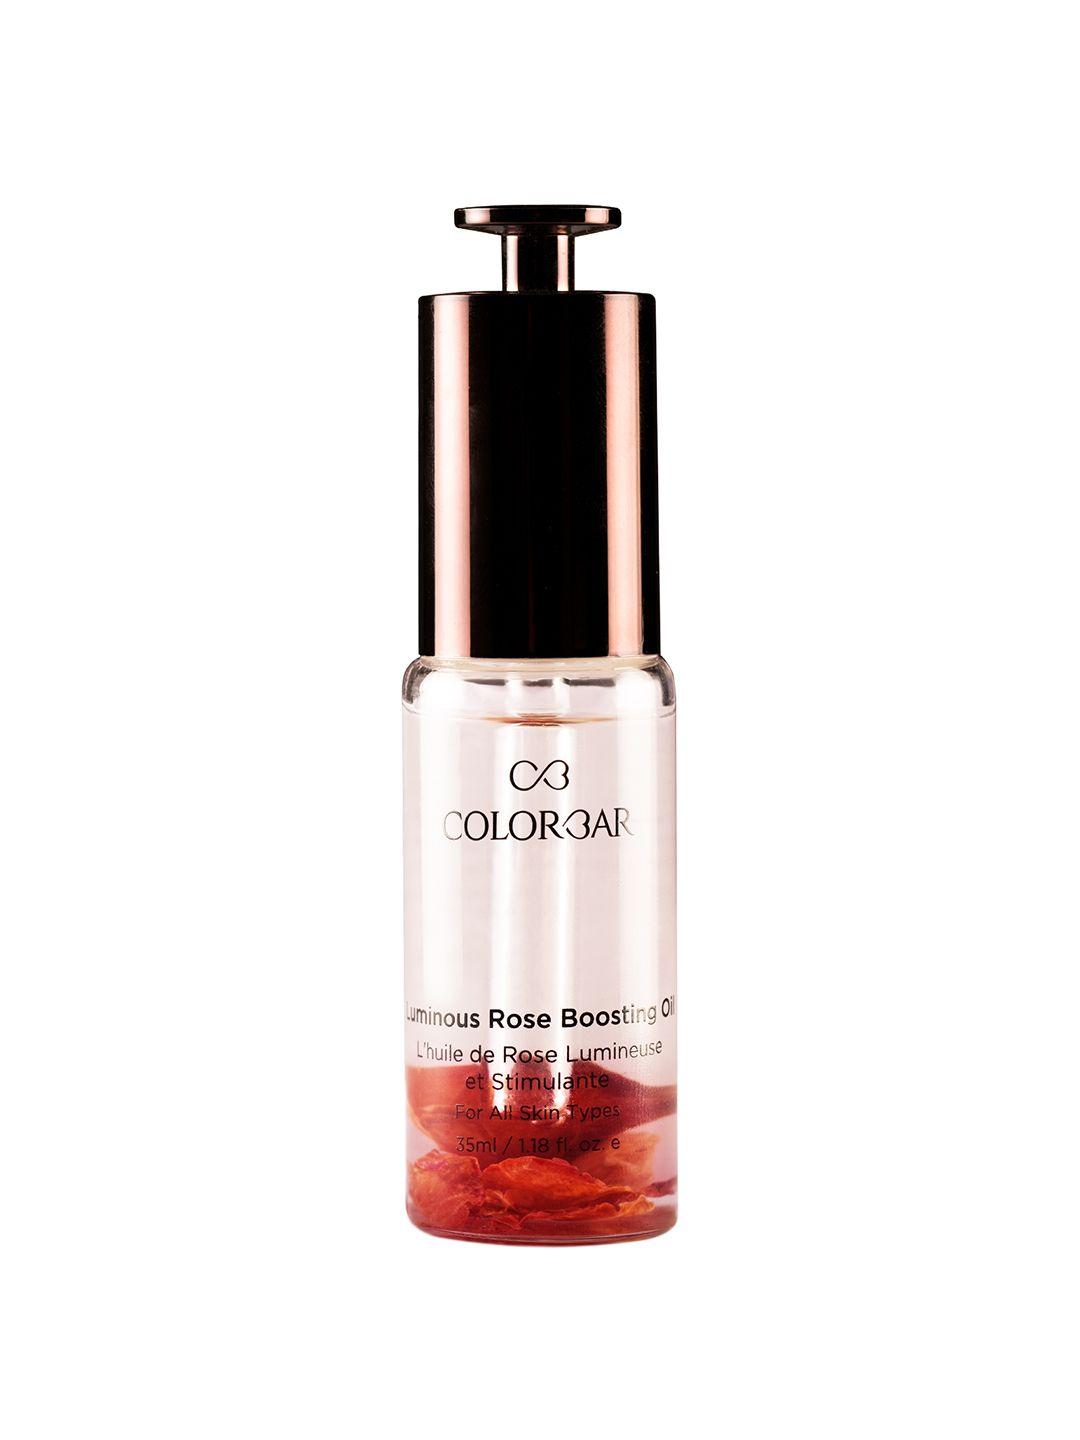 colorbar unisex luminous rose boosting oil 35 ml